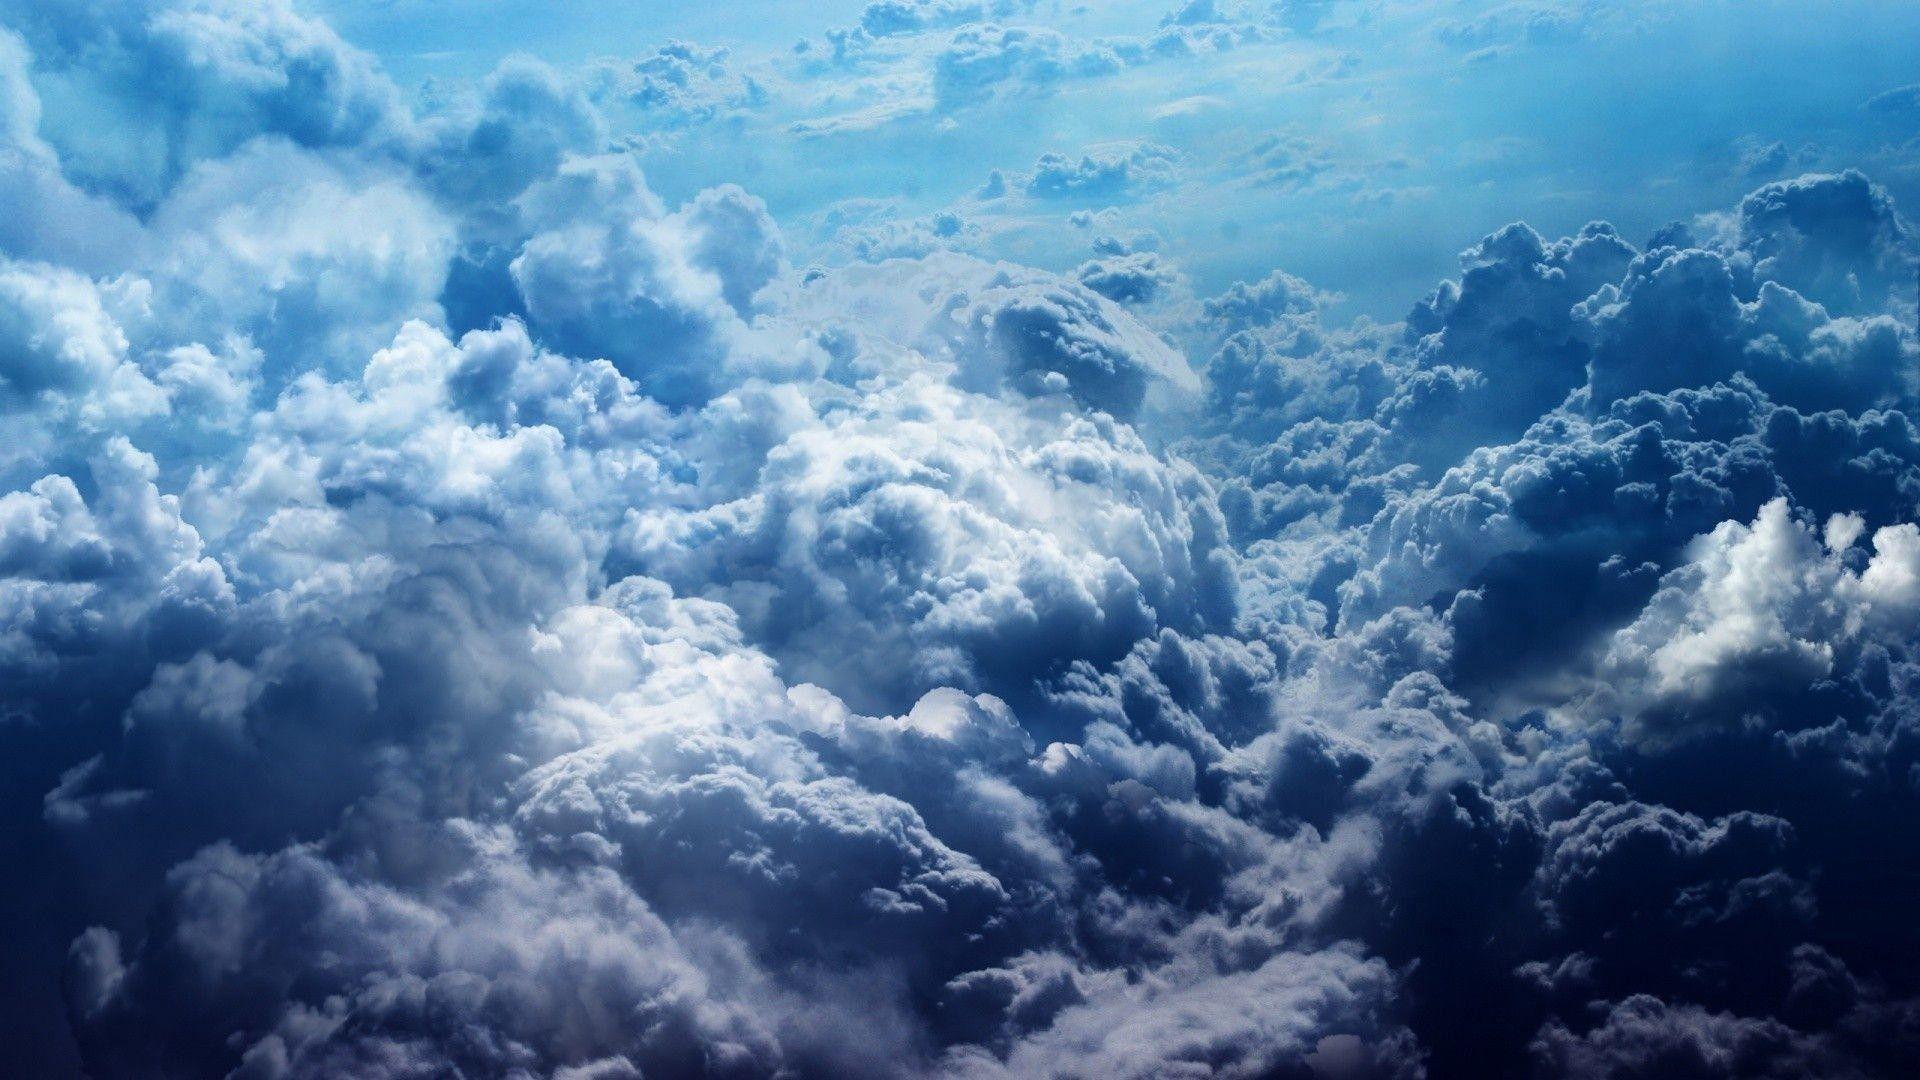 Best 100 Cloud Pictures HQ  Download Free Images on Unsplash